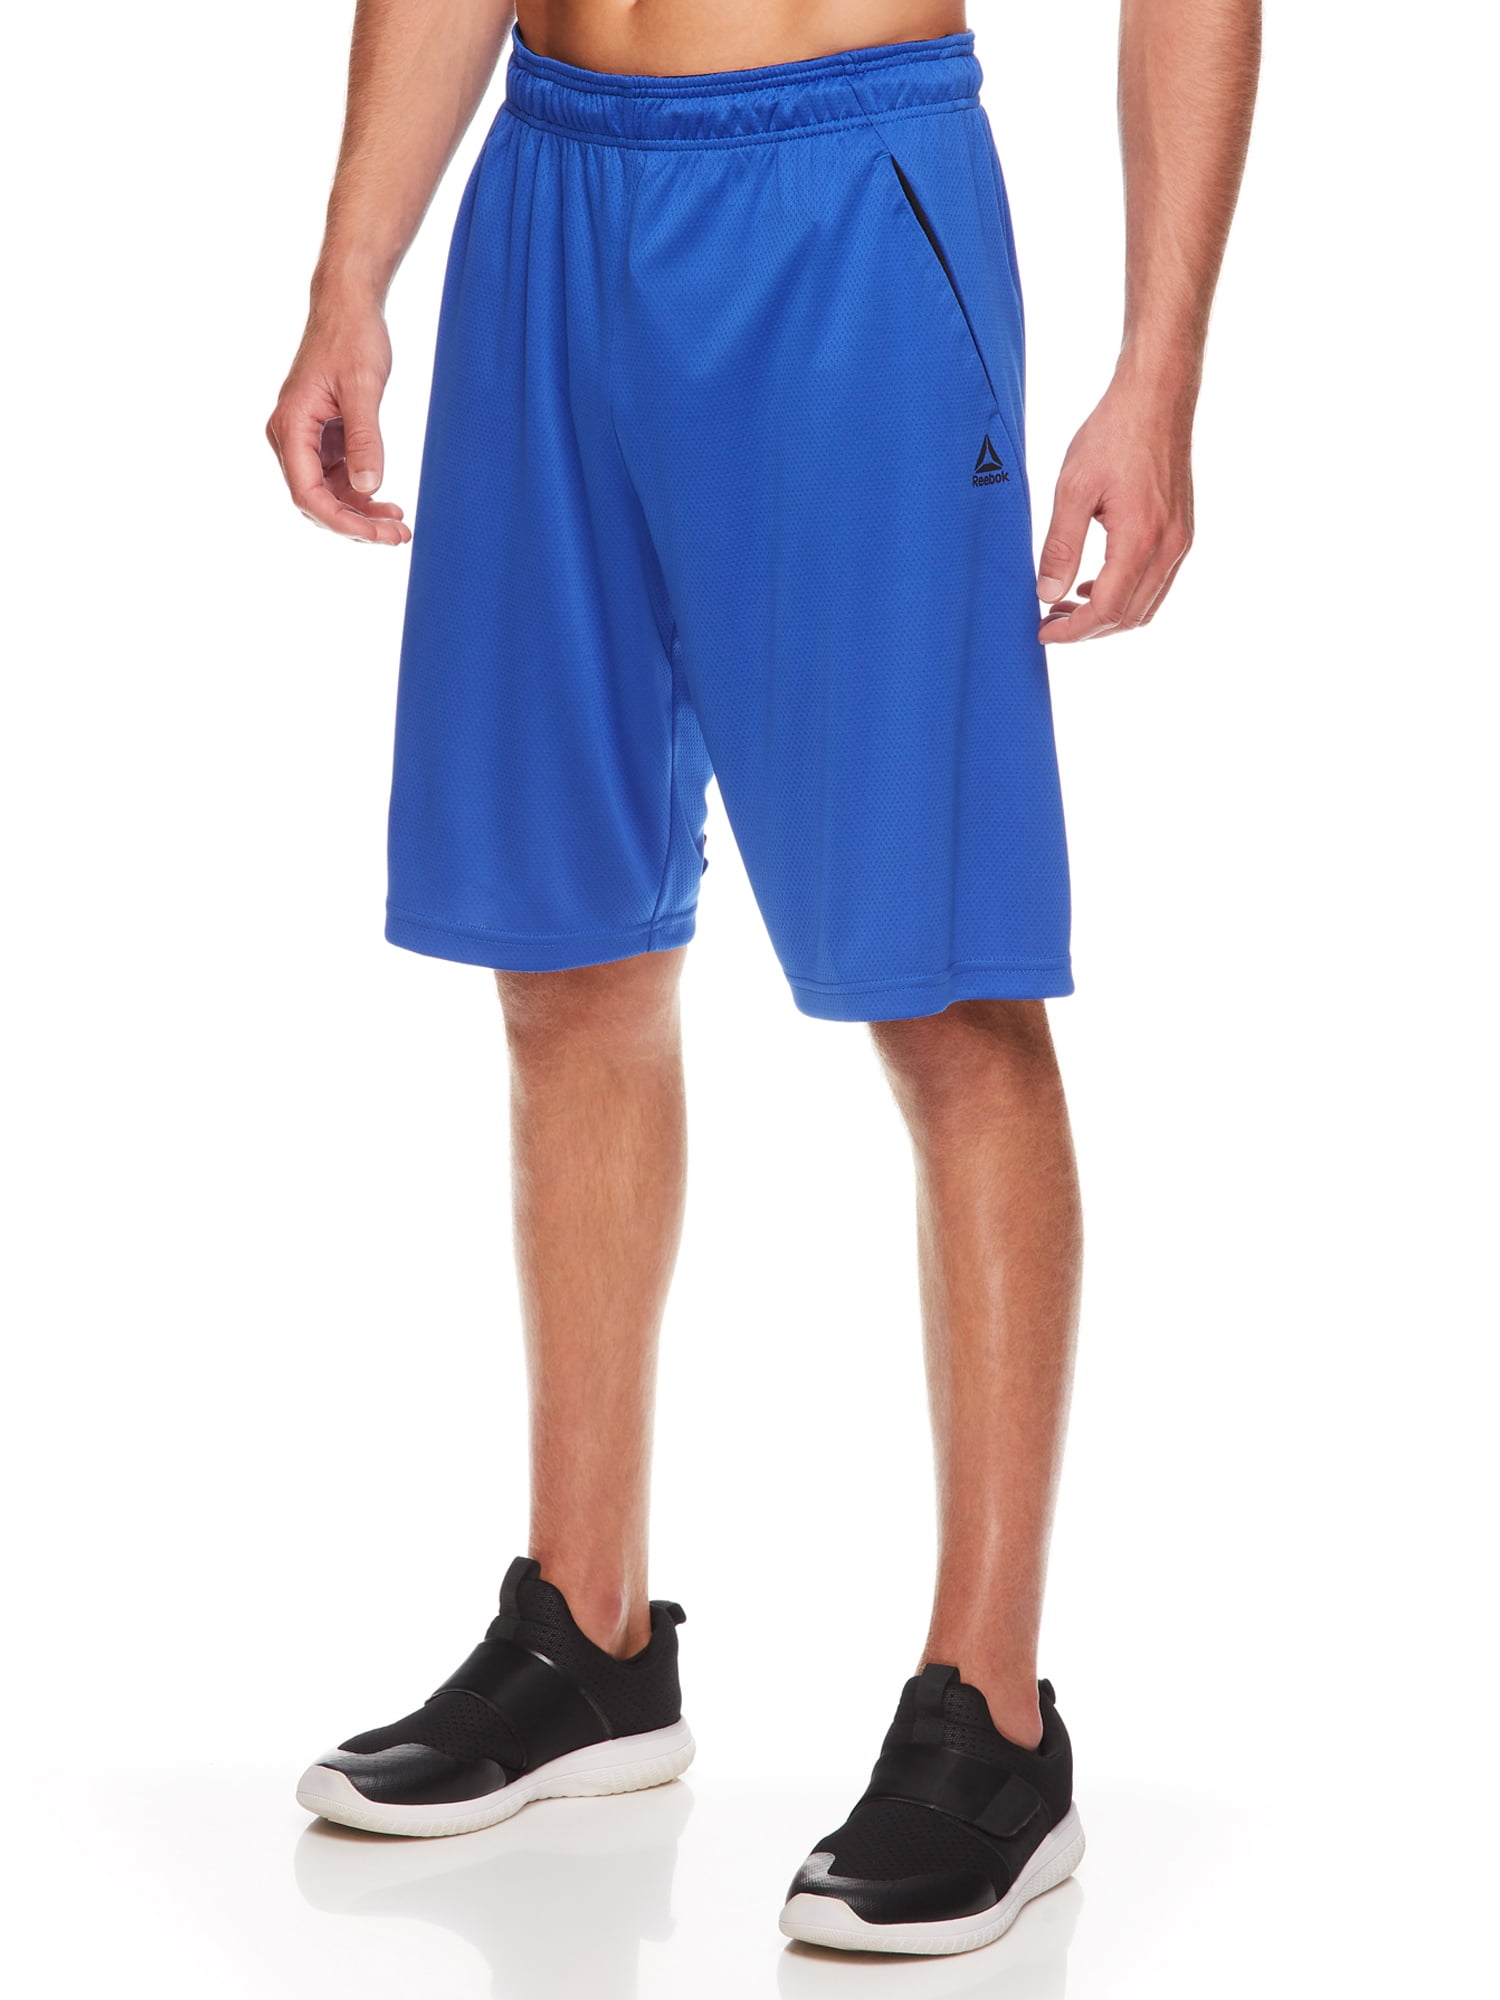 Reebok Men's Bank Shot Basketball Shorts - Walmart.com